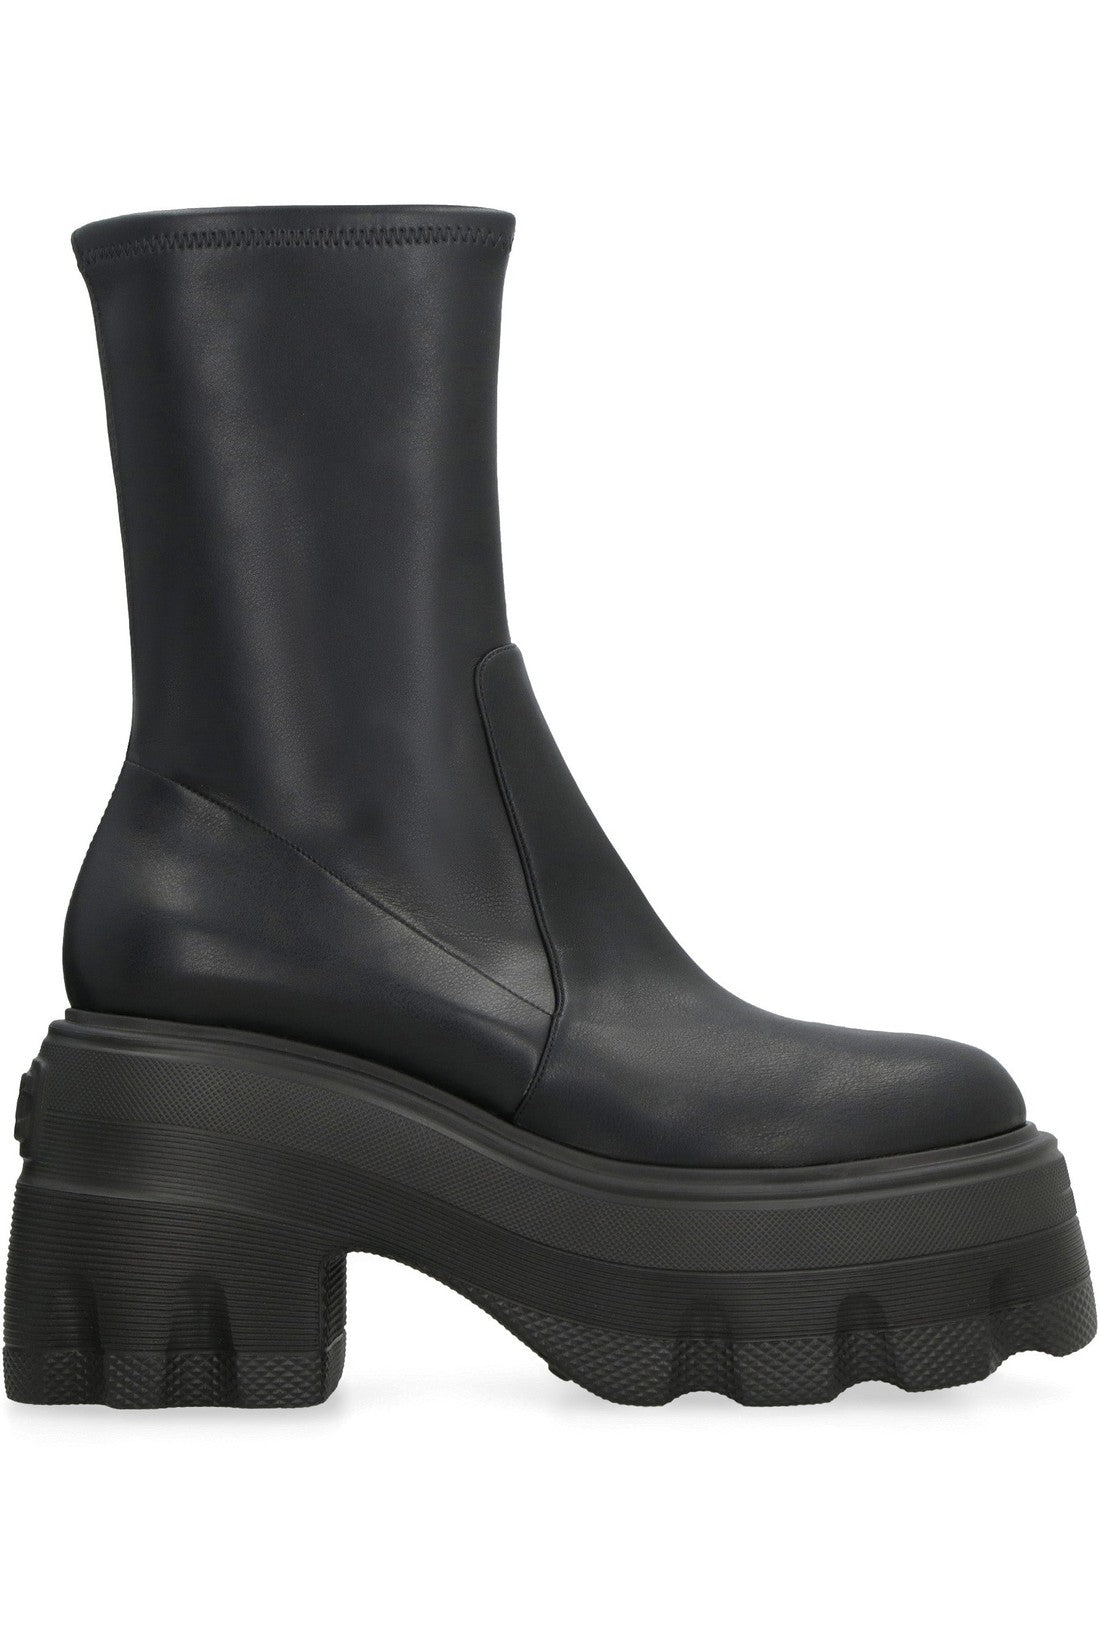 Casadei-OUTLET-SALE-Eco-leather ankle boots-ARCHIVIST